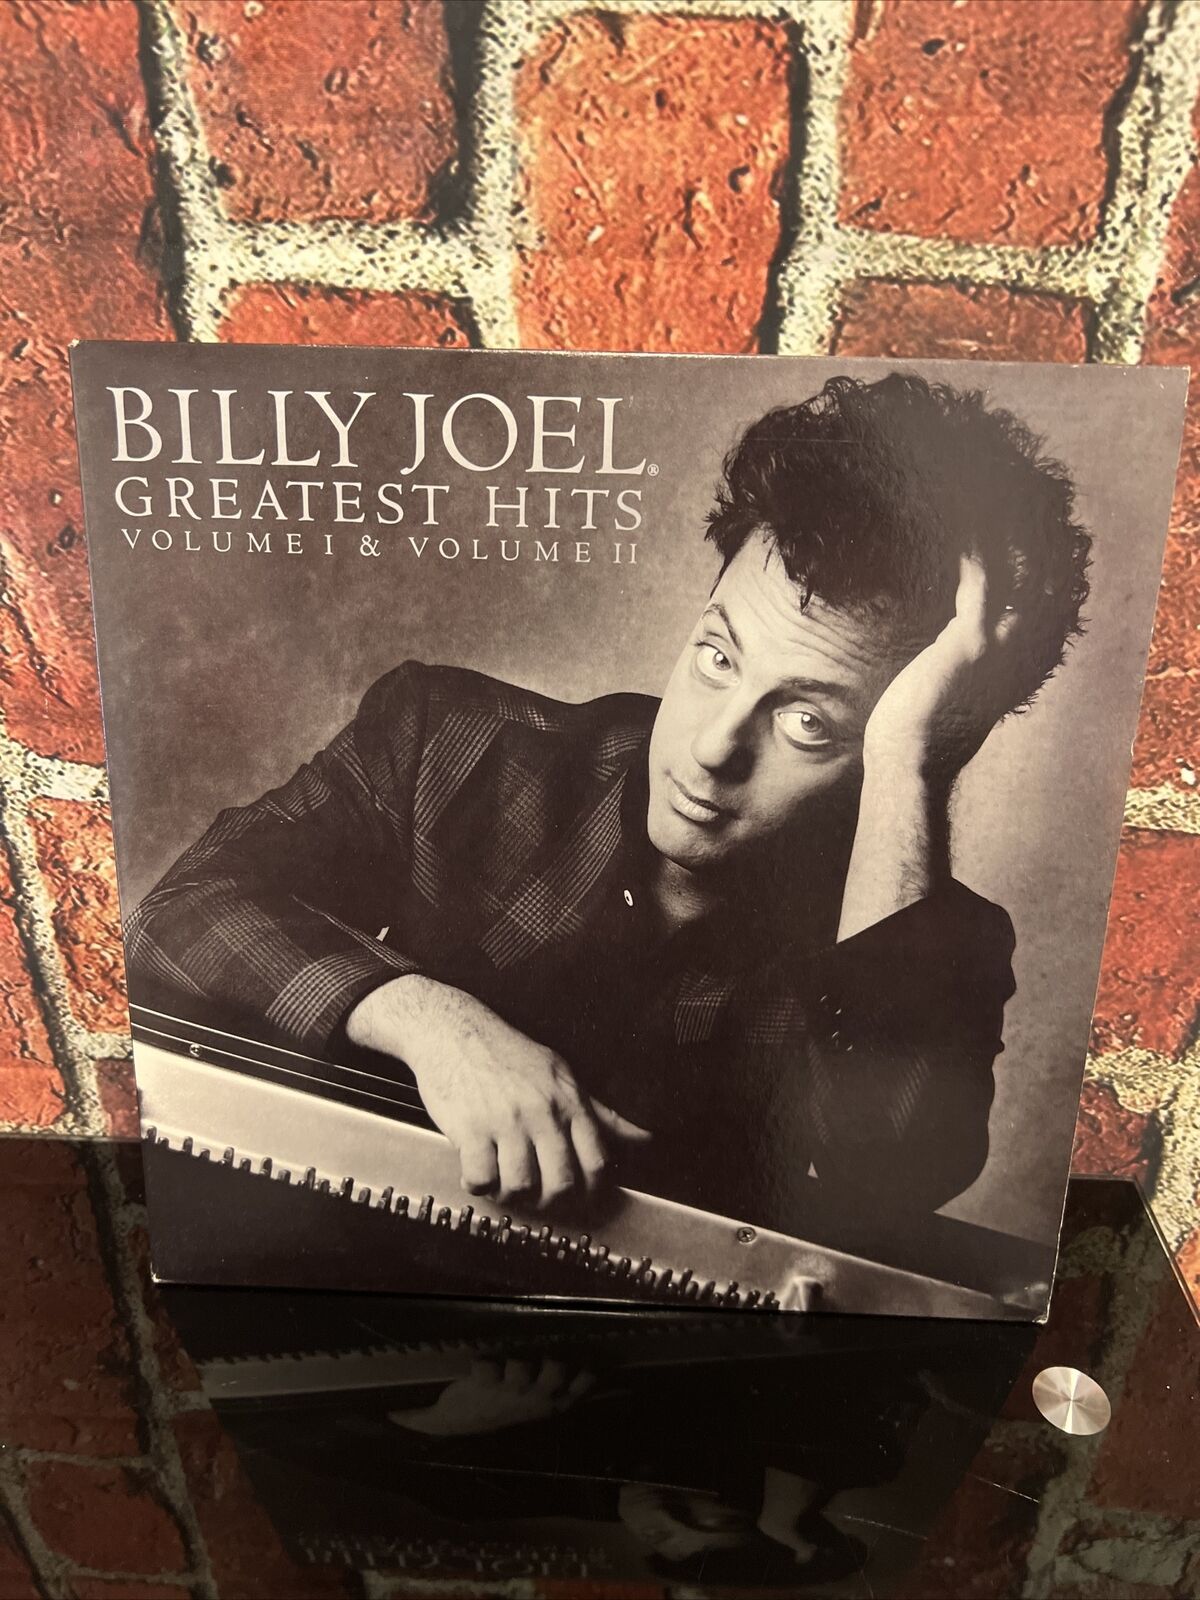 BILLY JOEL Greatest Hits Volume I & Volume II vinyl LP  1985 press - Promo 2-LP